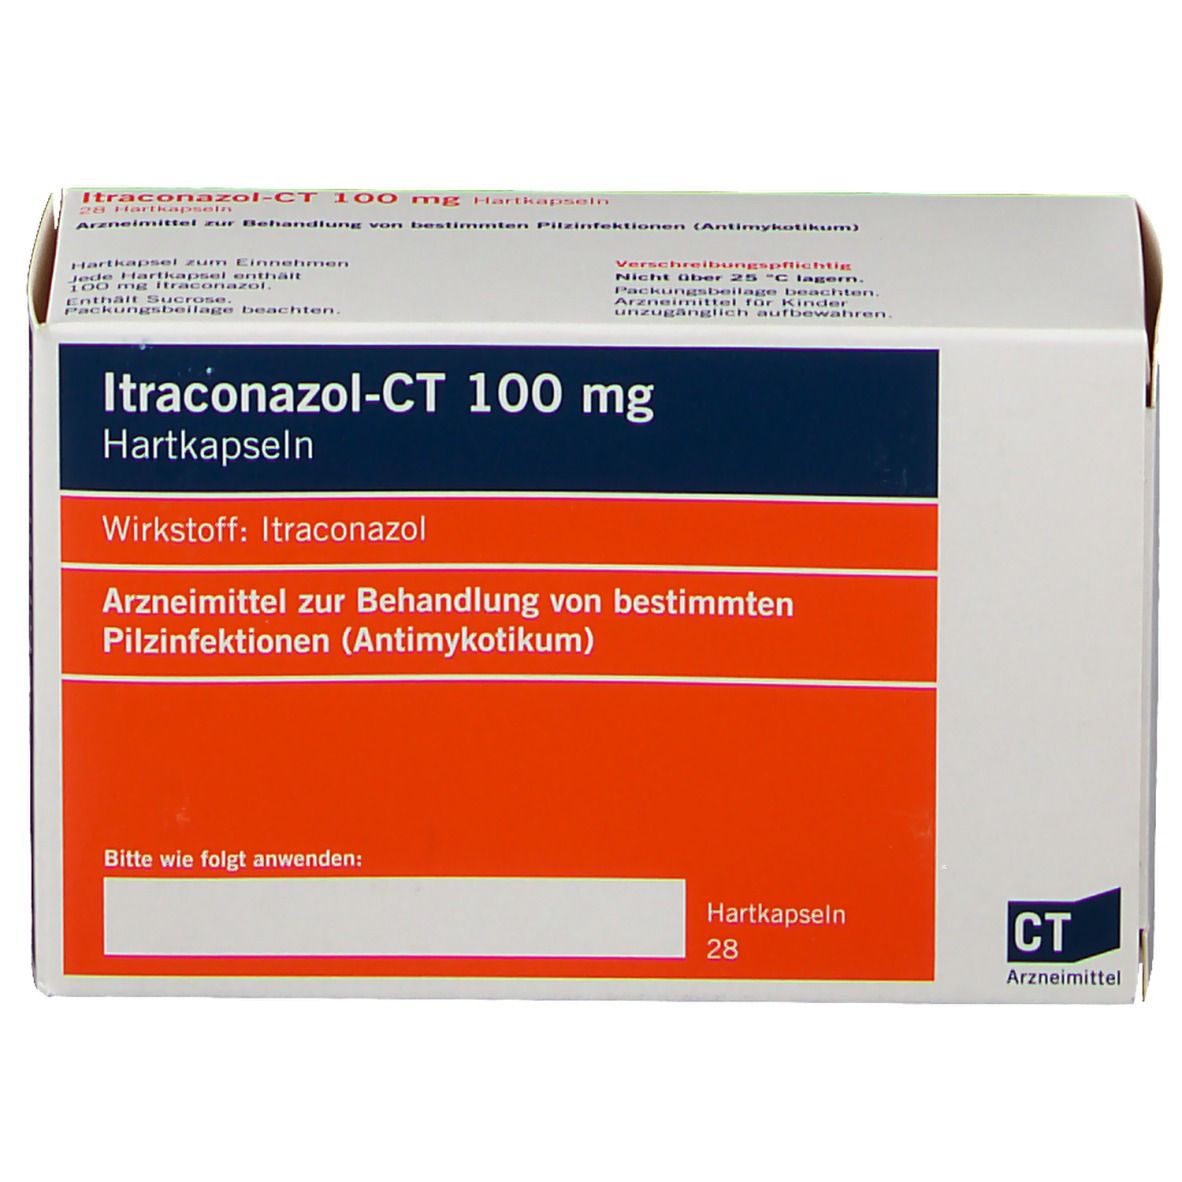 Itraconazol-CT 100 mg